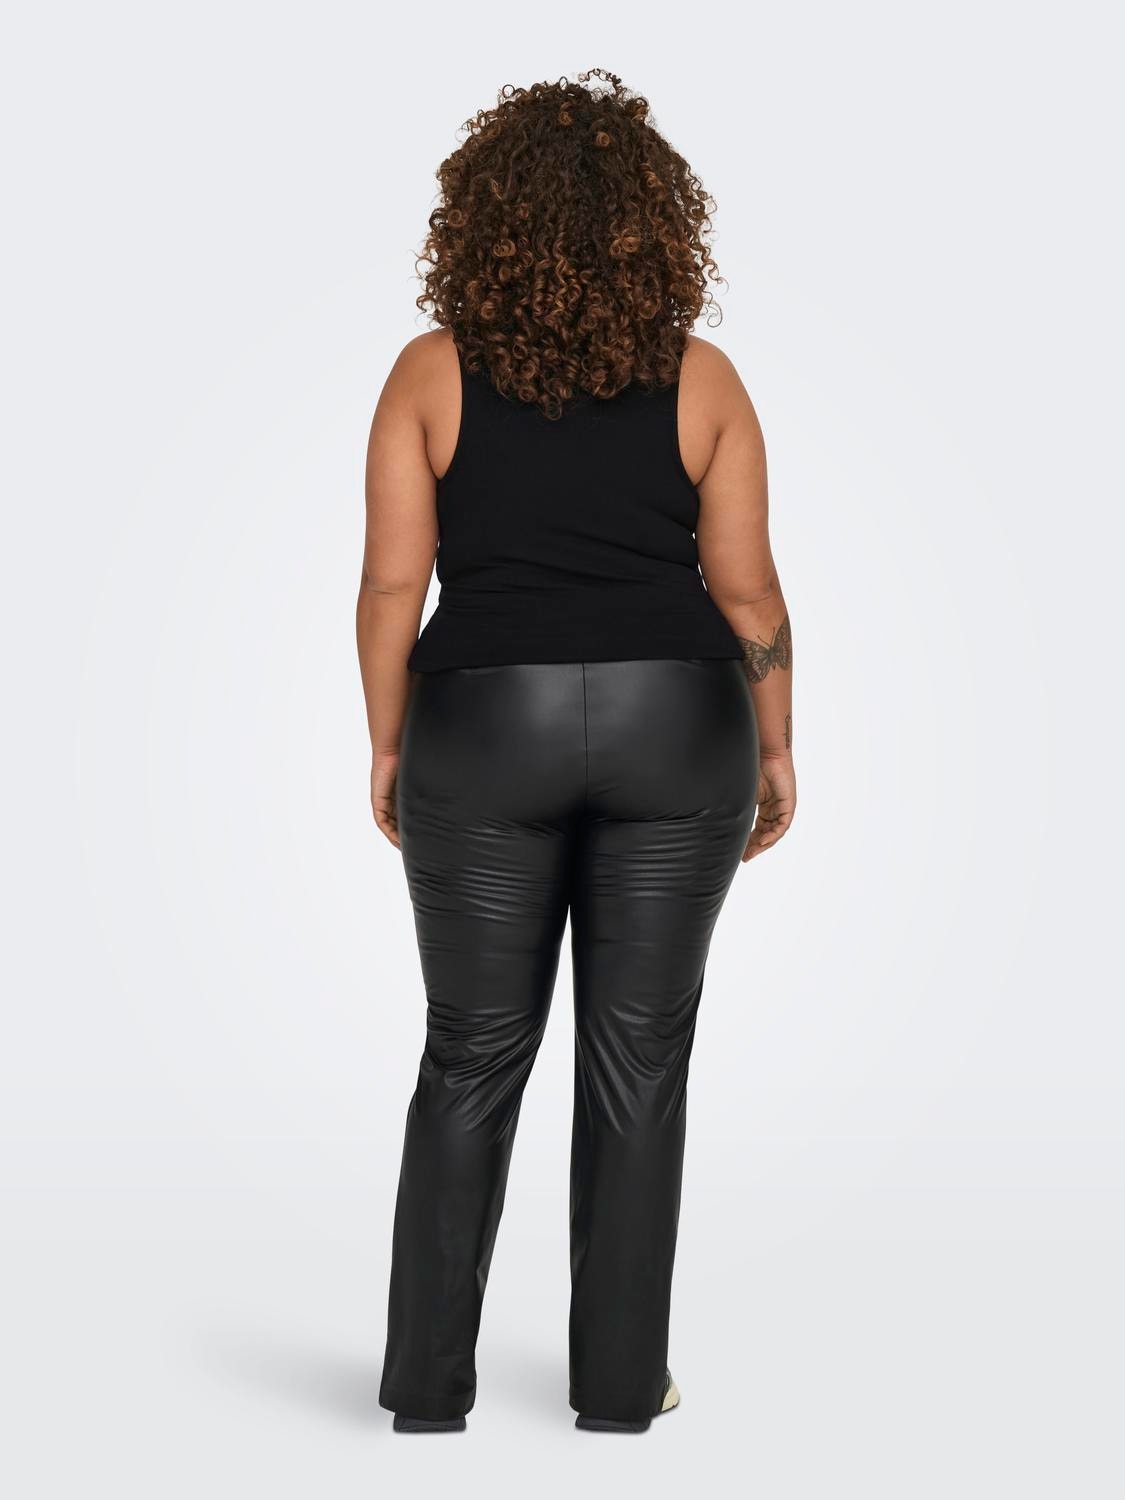 ONLY curvy coated leggings -Black - 15295530